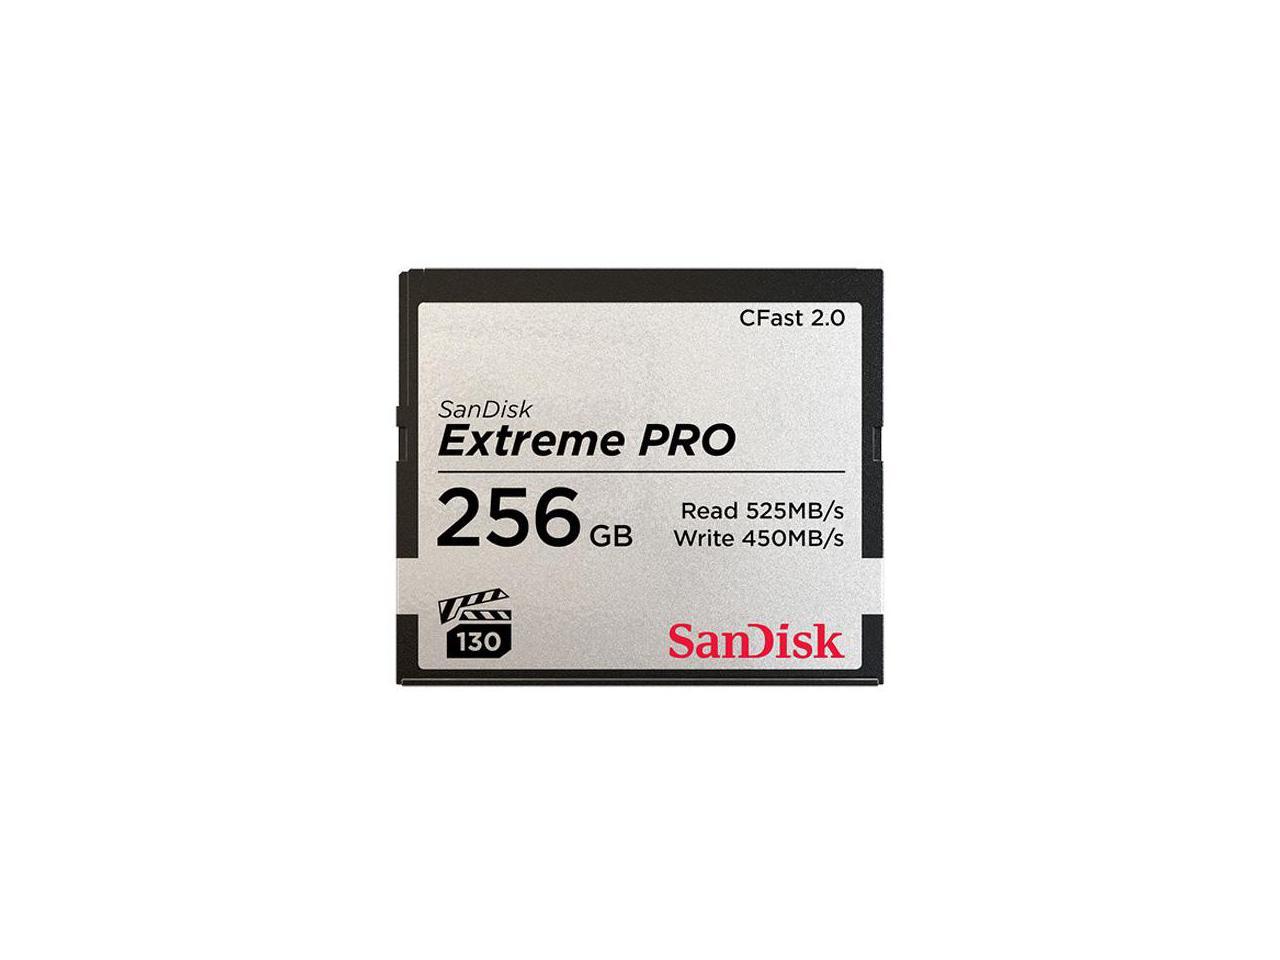 Souvenir Mob gambling SanDisk Extreme PRO 256GB CFast 2.0 Memory Card #SDCFSP-256G-A46D -  Newegg.com